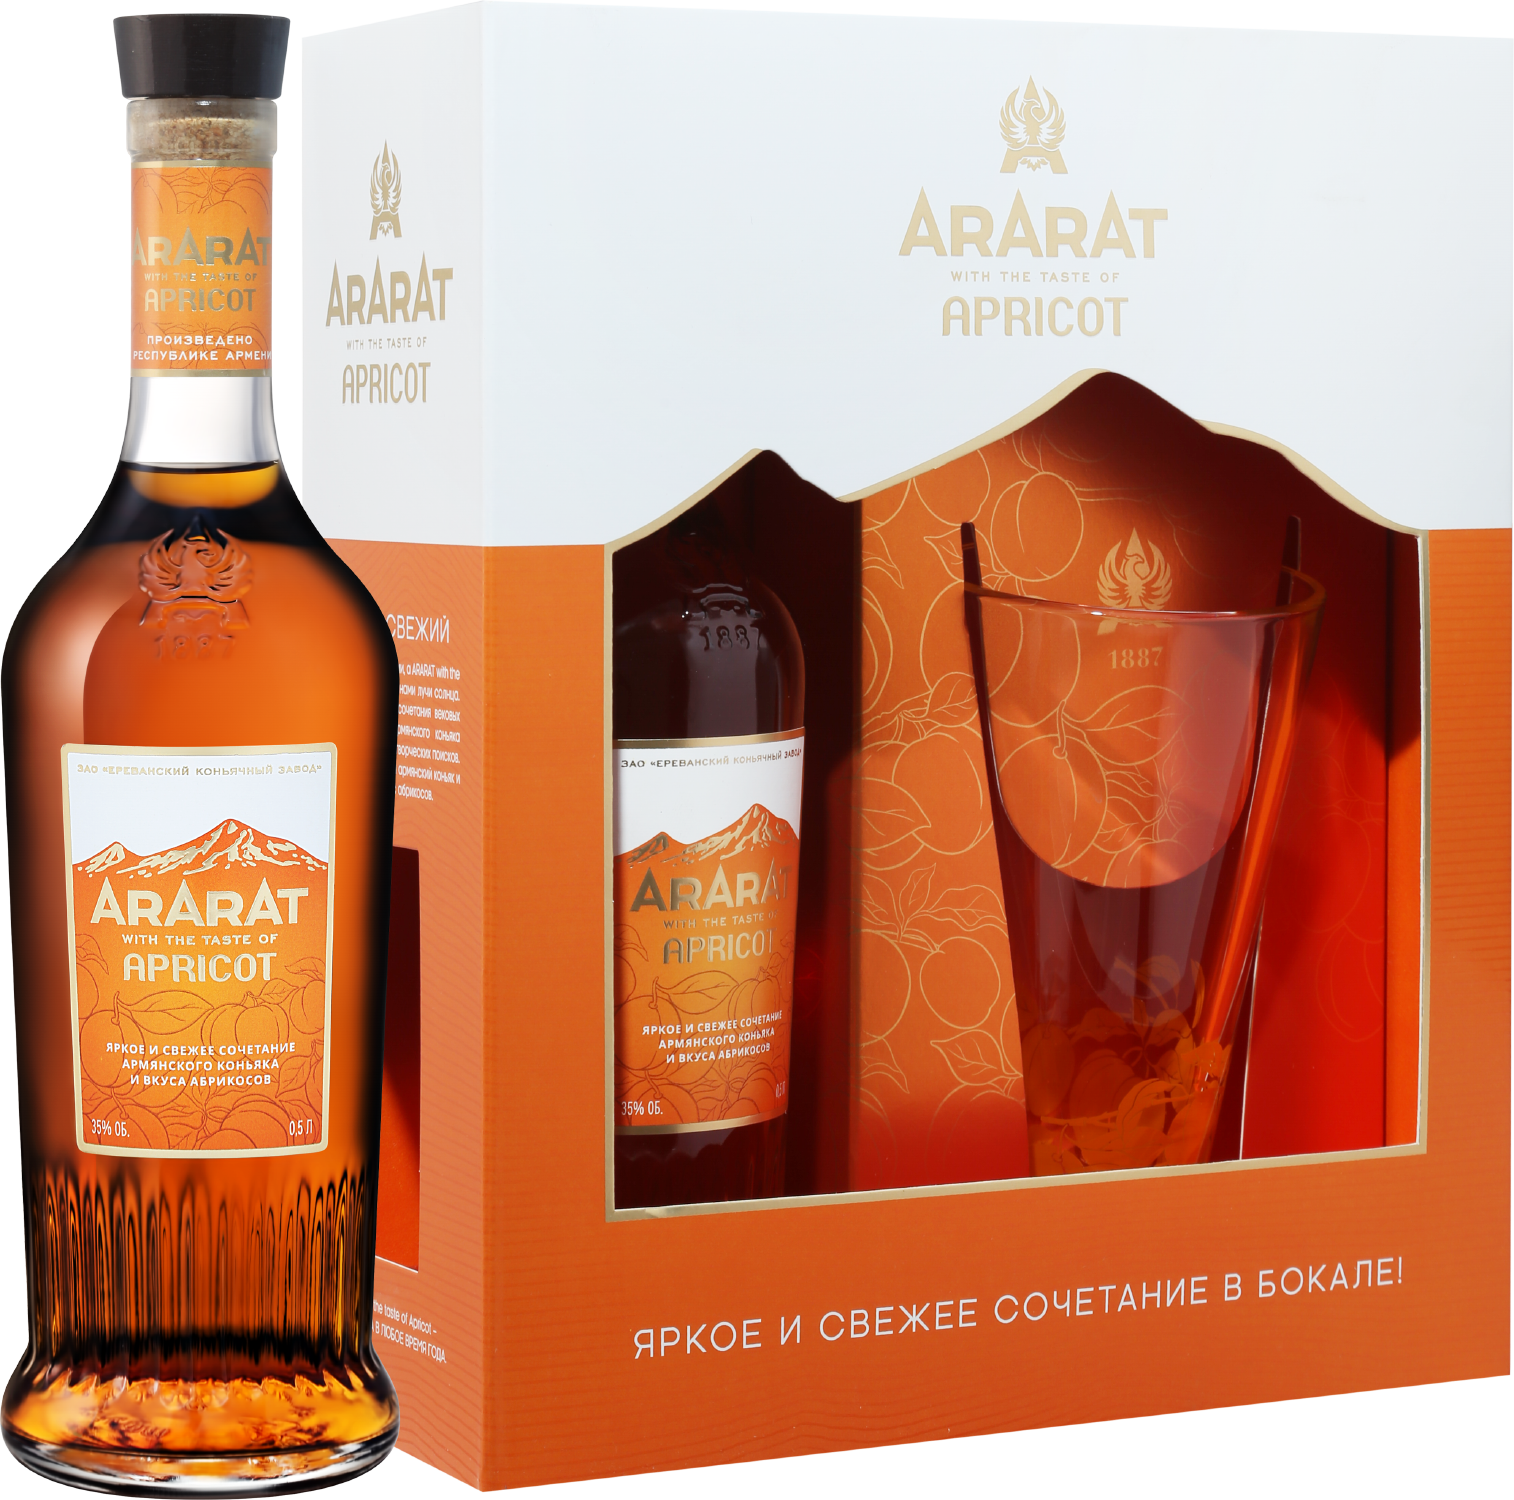 ARARAT Apricot (gift box with a glass) ararat erebuni 30 y o gift box